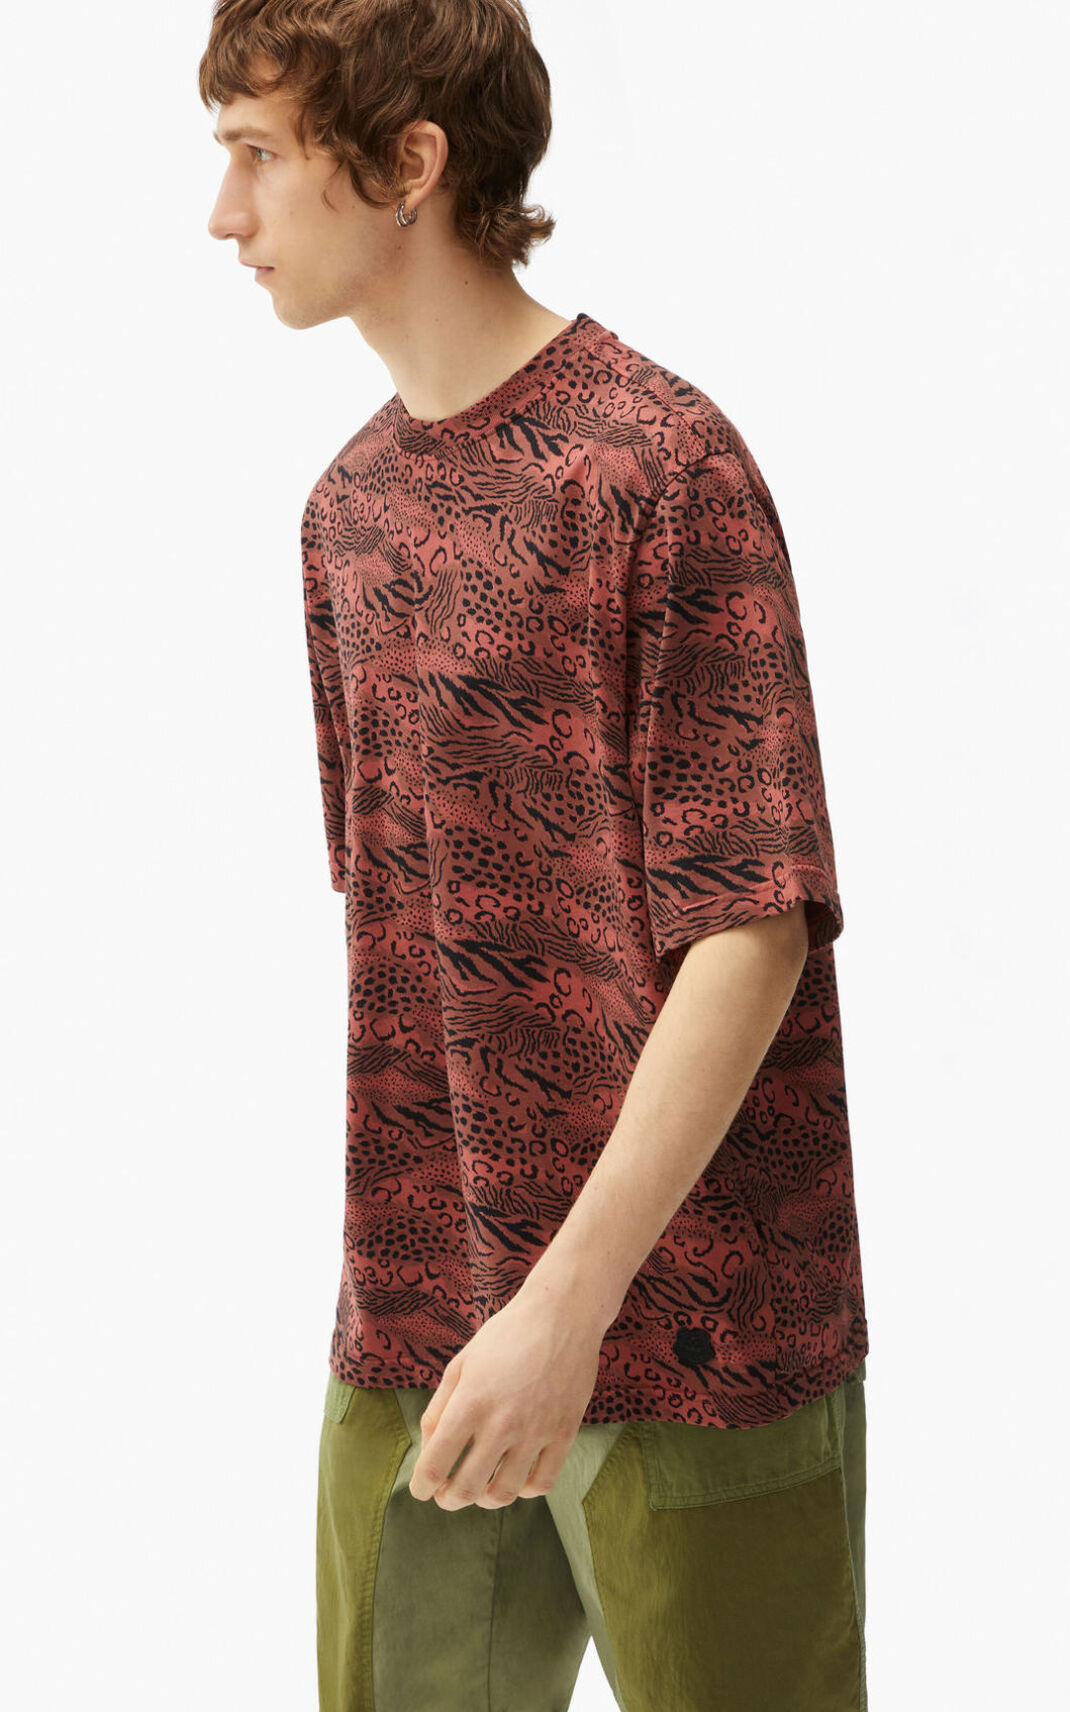 Kenzo Leopard Tシャツ メンズ 暗ピンク - IBMRUJ302